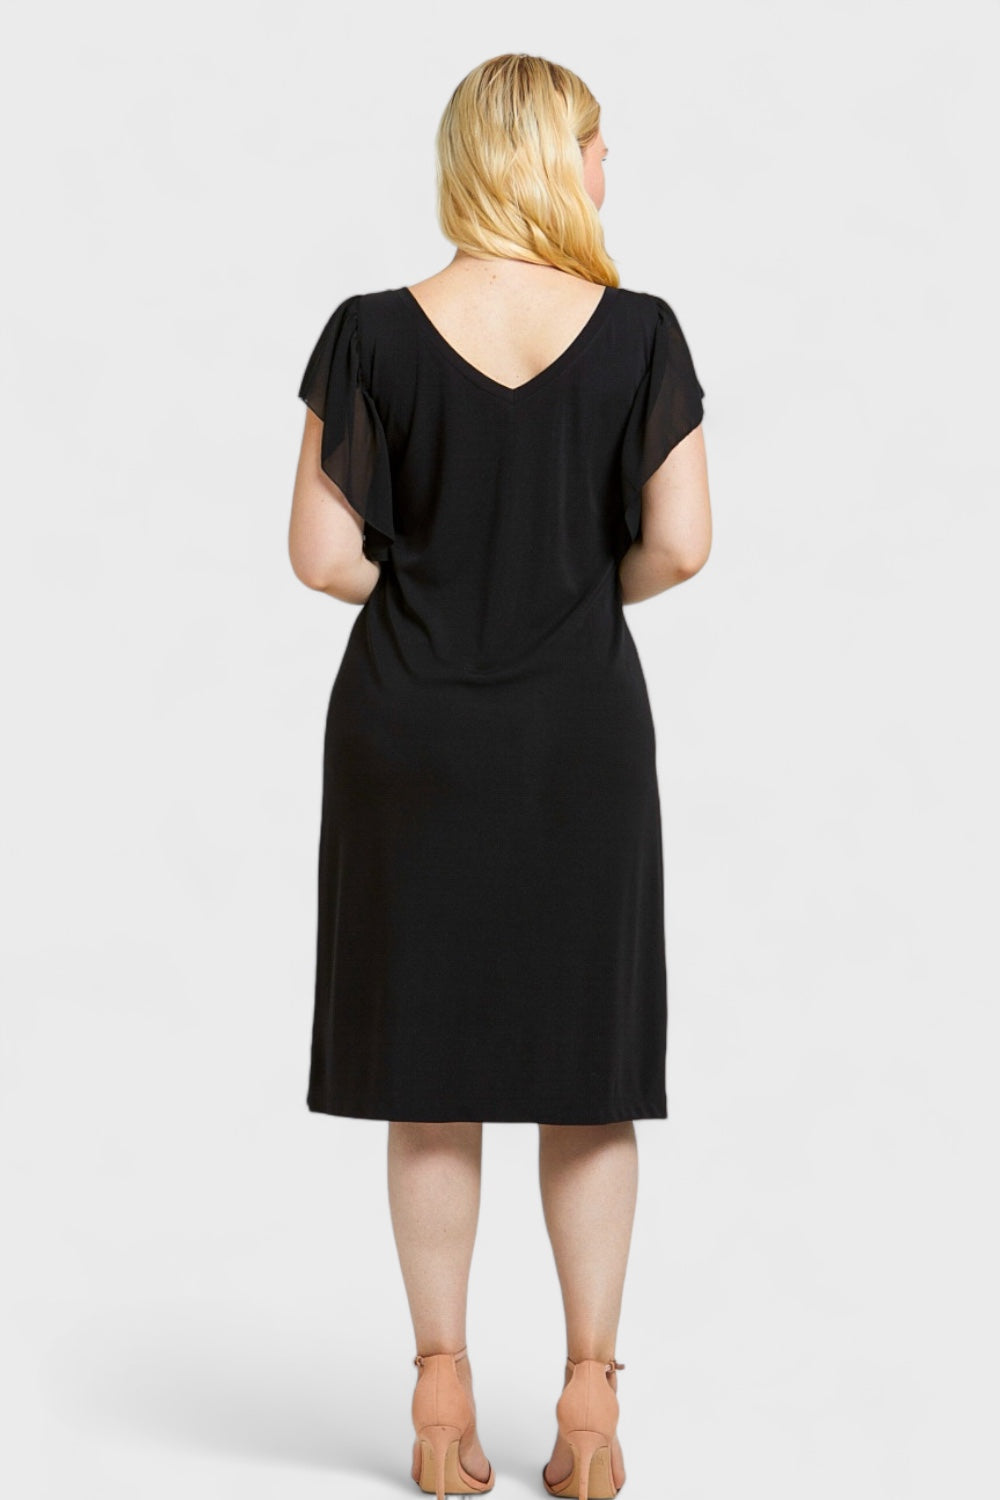 Cella Plus Size Black Ruffled Sleeves Jersey Dress by Sara Sabella Italian Women's Fashion